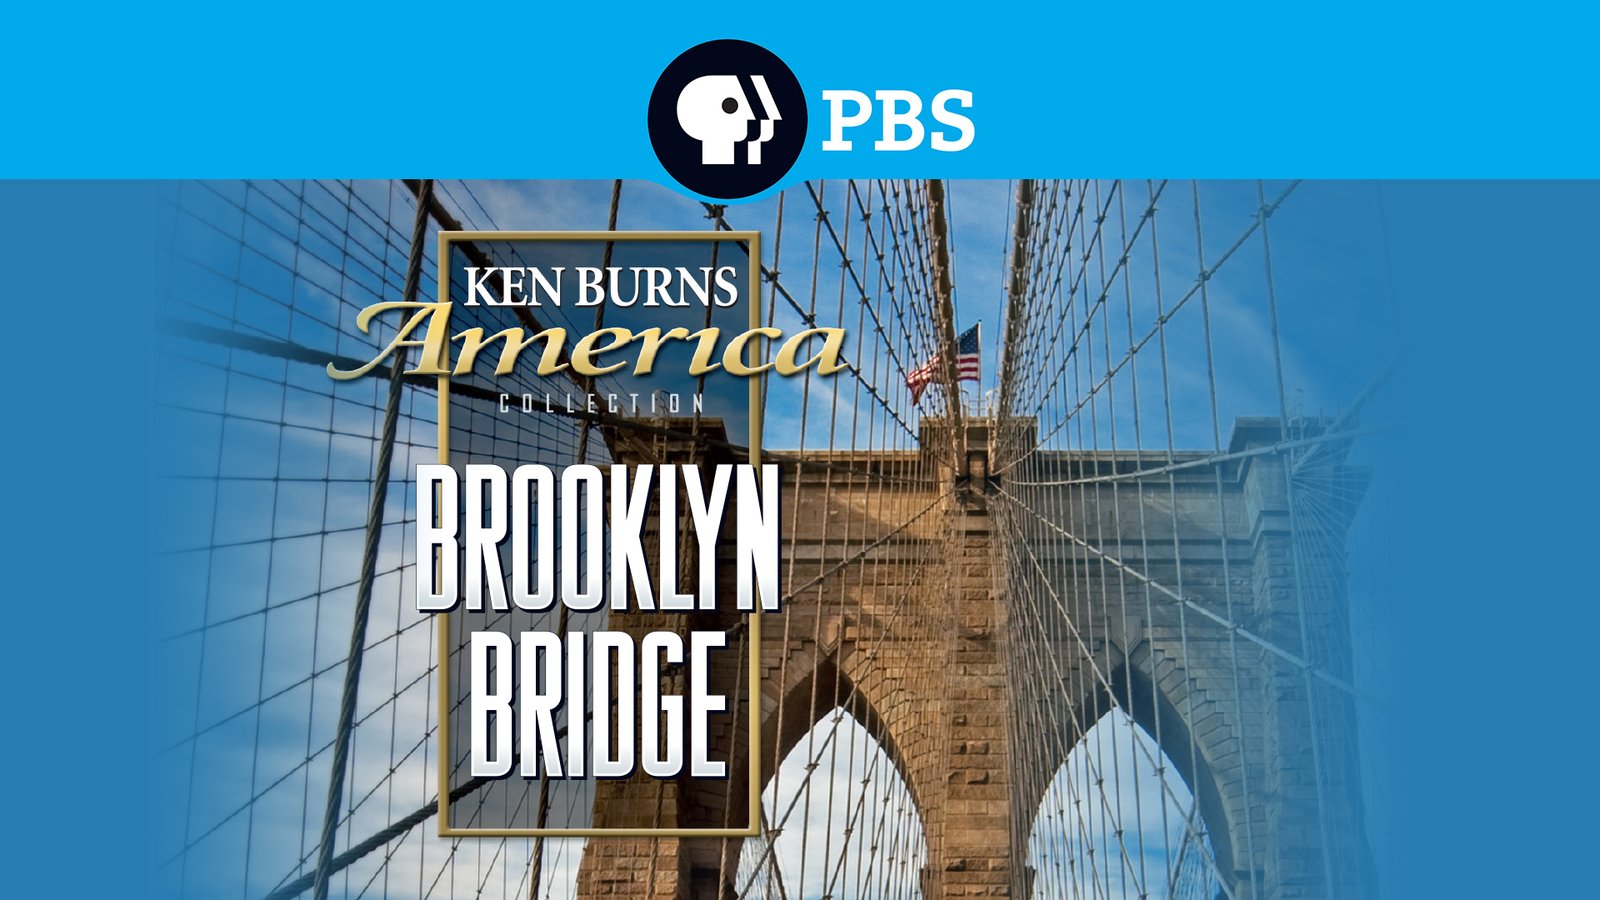 Ken Burns: The Brooklyn Bridge